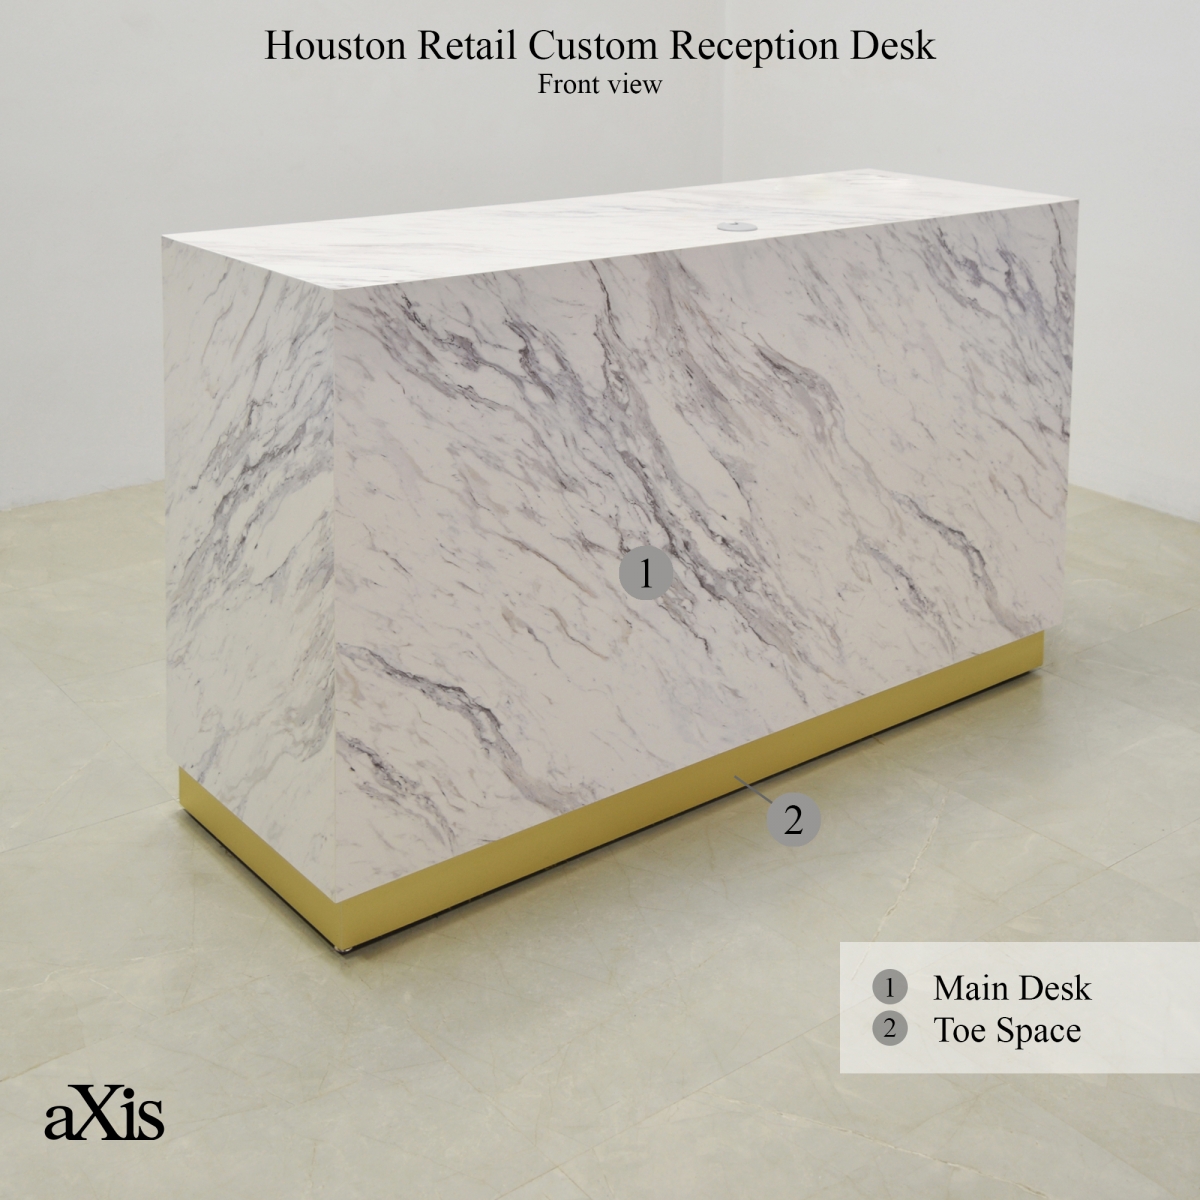 Houston Retail Custom Reception Desk